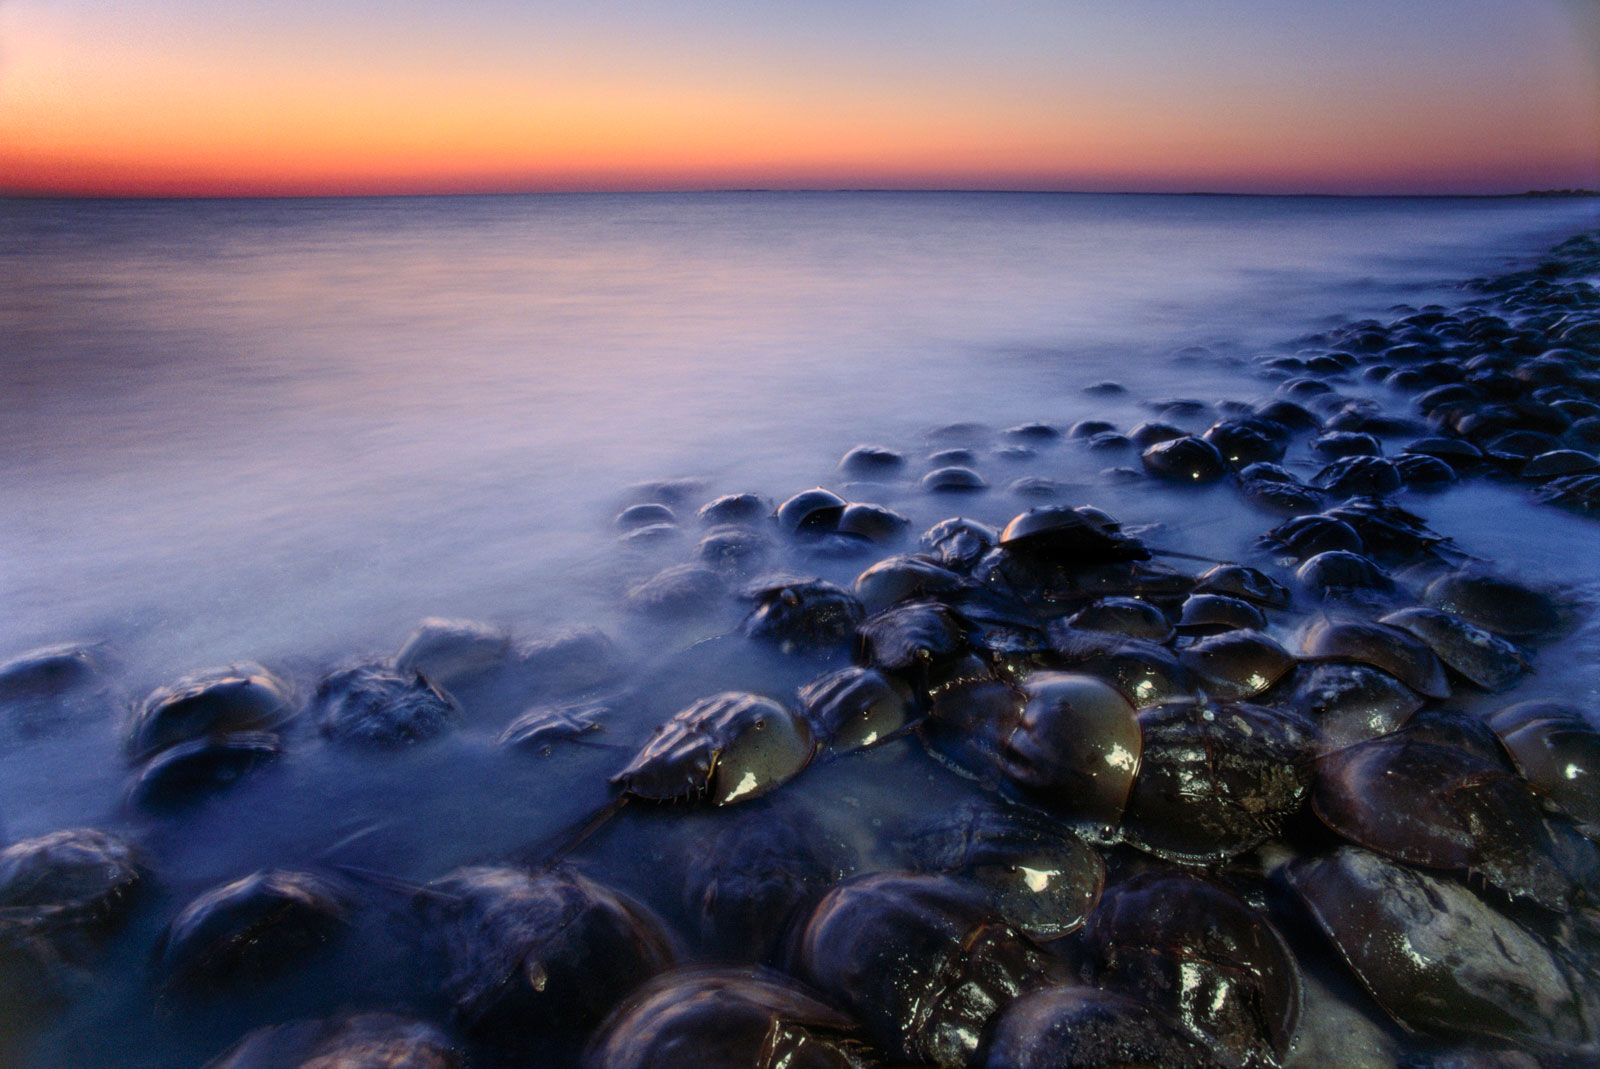 Horseshoe crabs spawning at dusk, Delaware Bay, New Jersey, USA